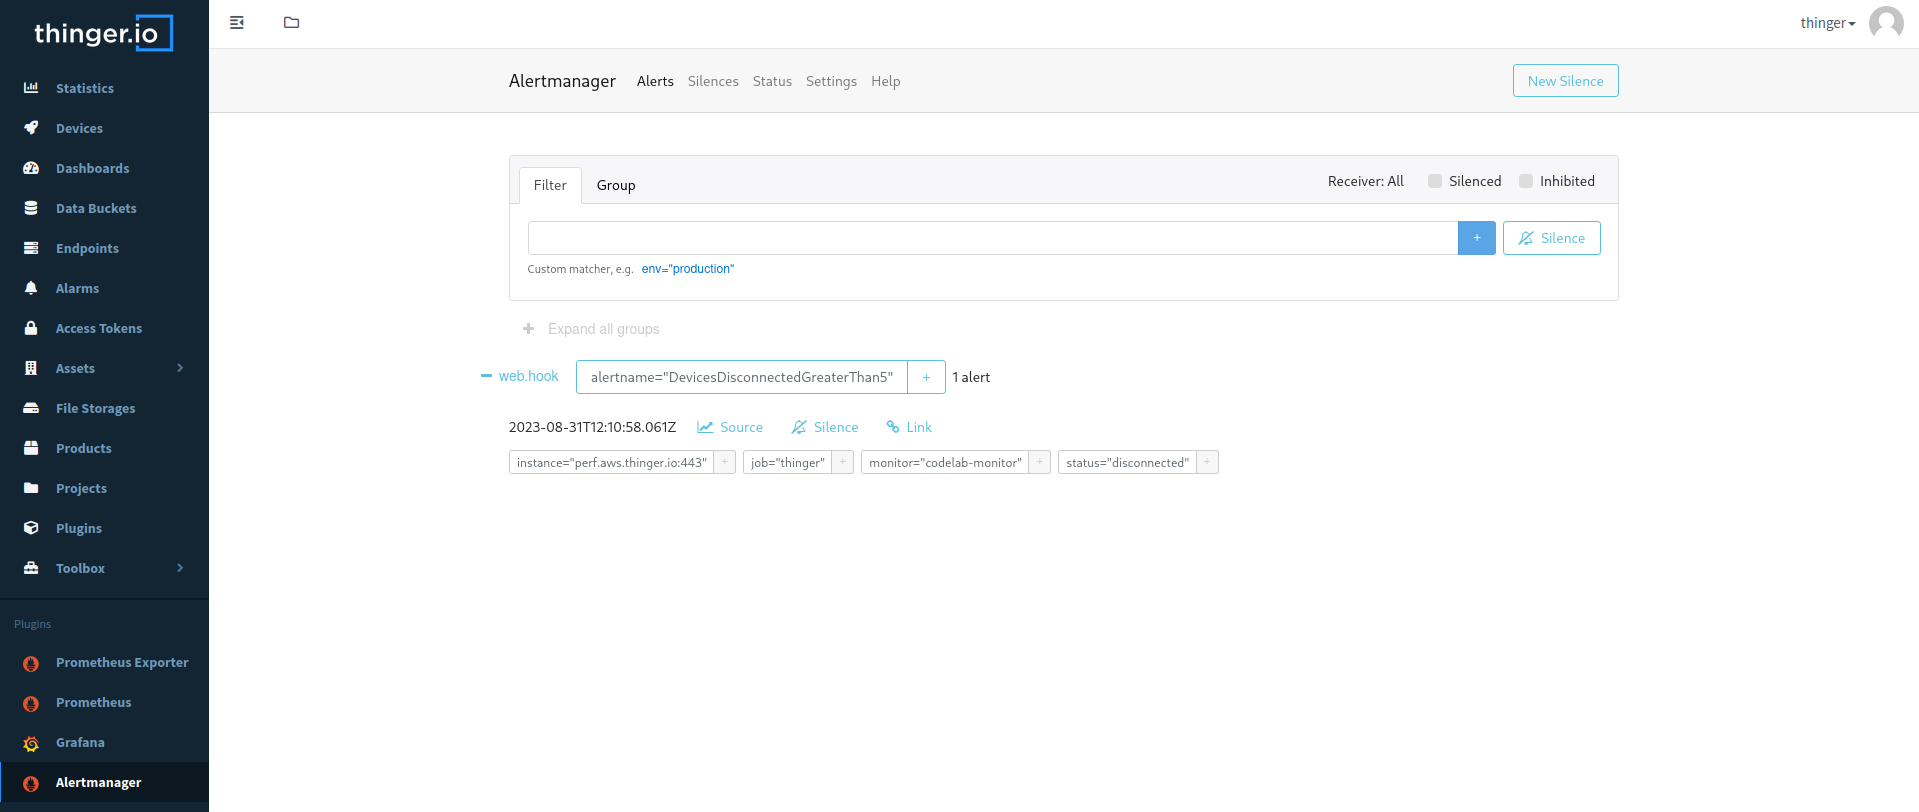 Alertmanager web UI integrated into Thinger.io Platform